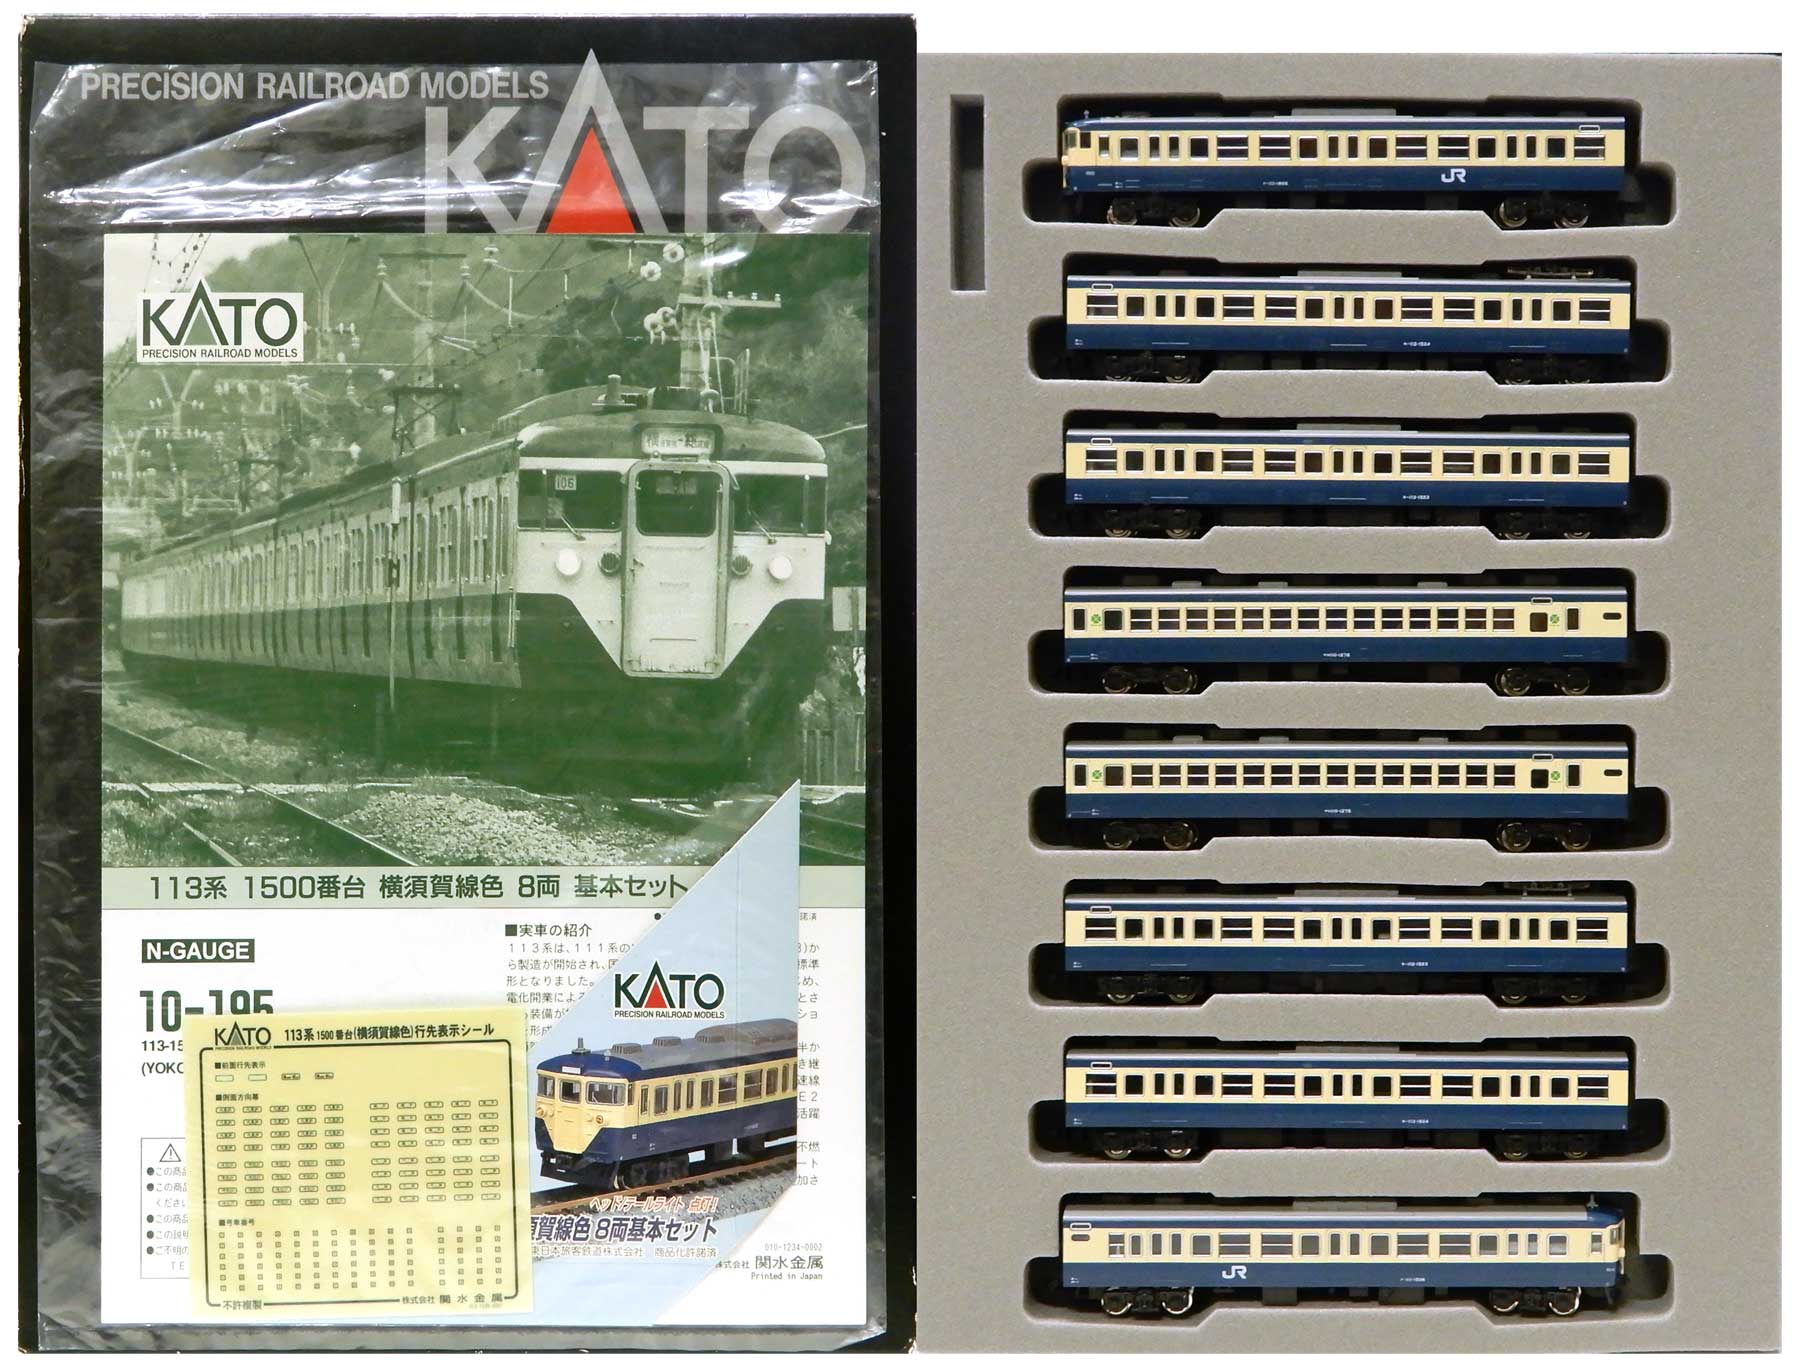 KATO 10-195 113 1500系 1500番台 横須賀線色 8両基本-